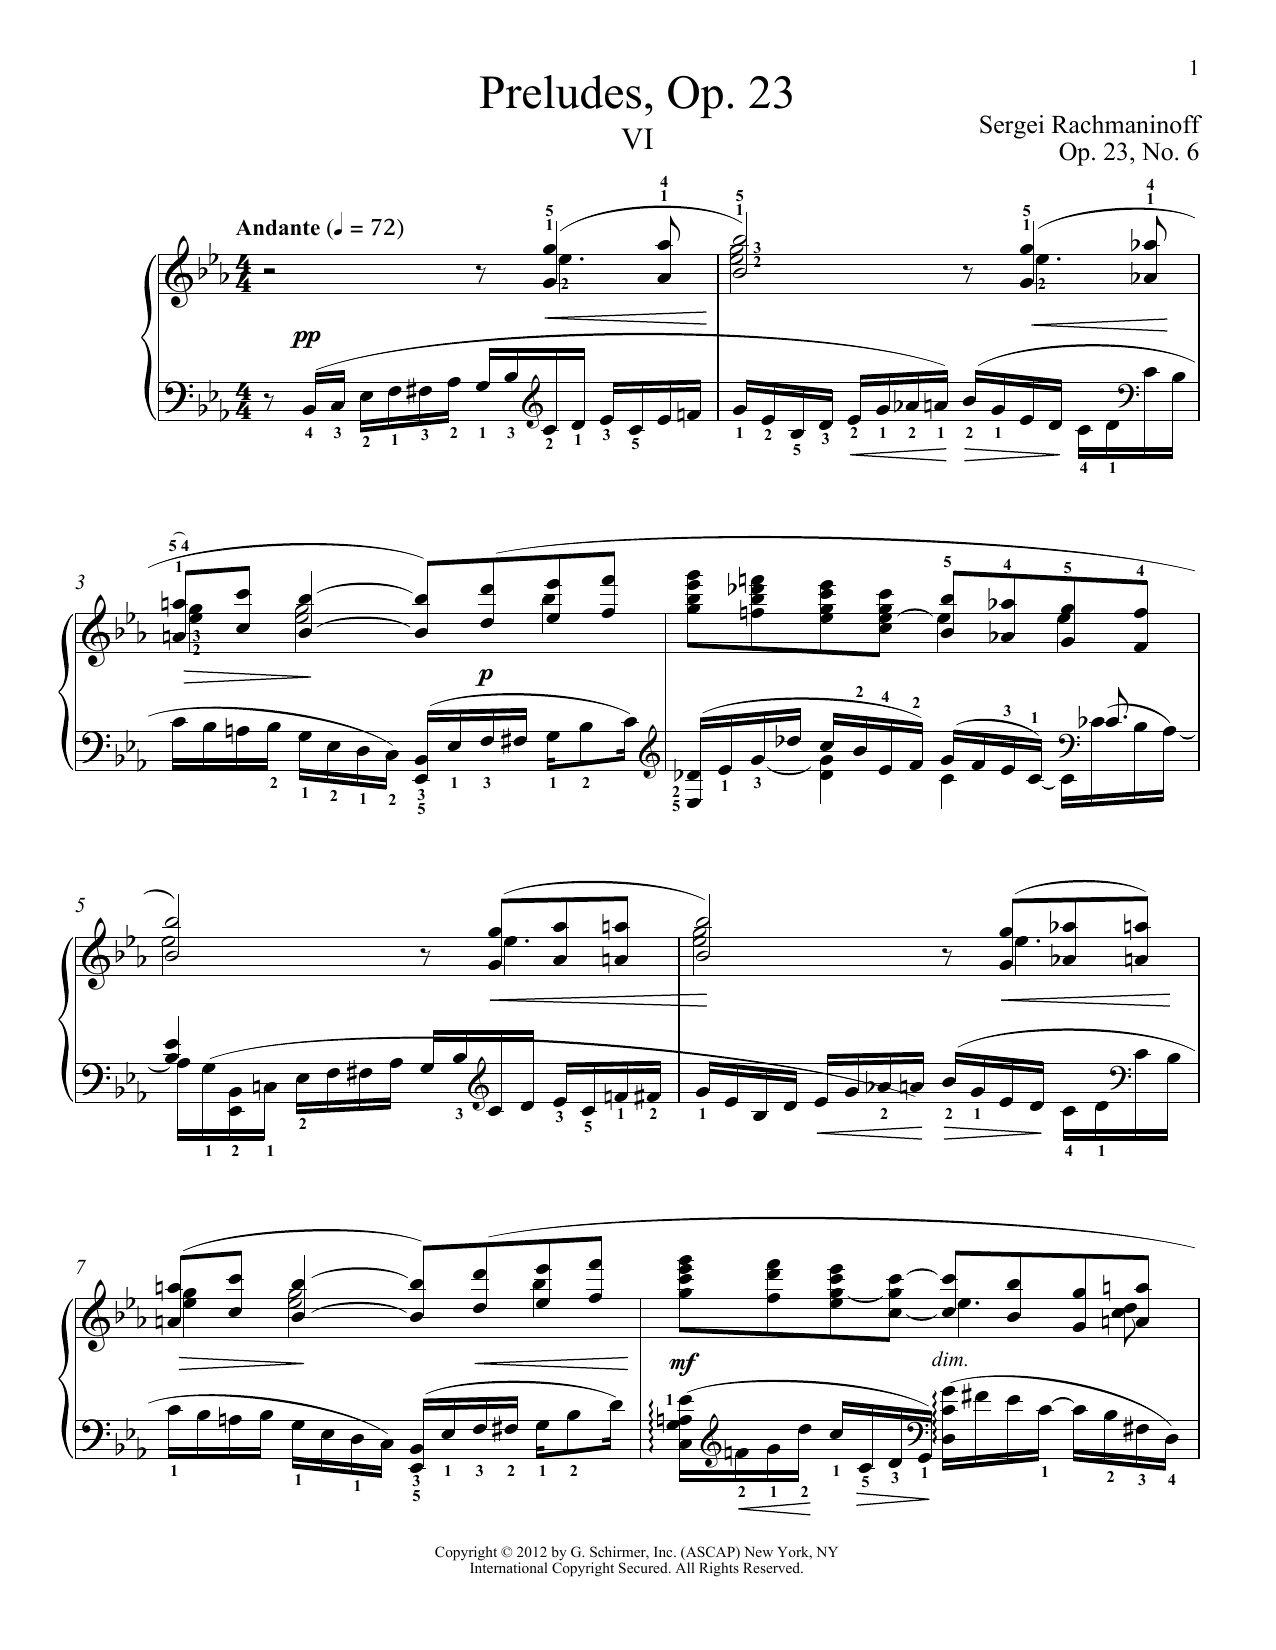 Download Sergei Rachmaninoff Prelude In E-Flat Major, Op. 23, No. 6 Sheet Music